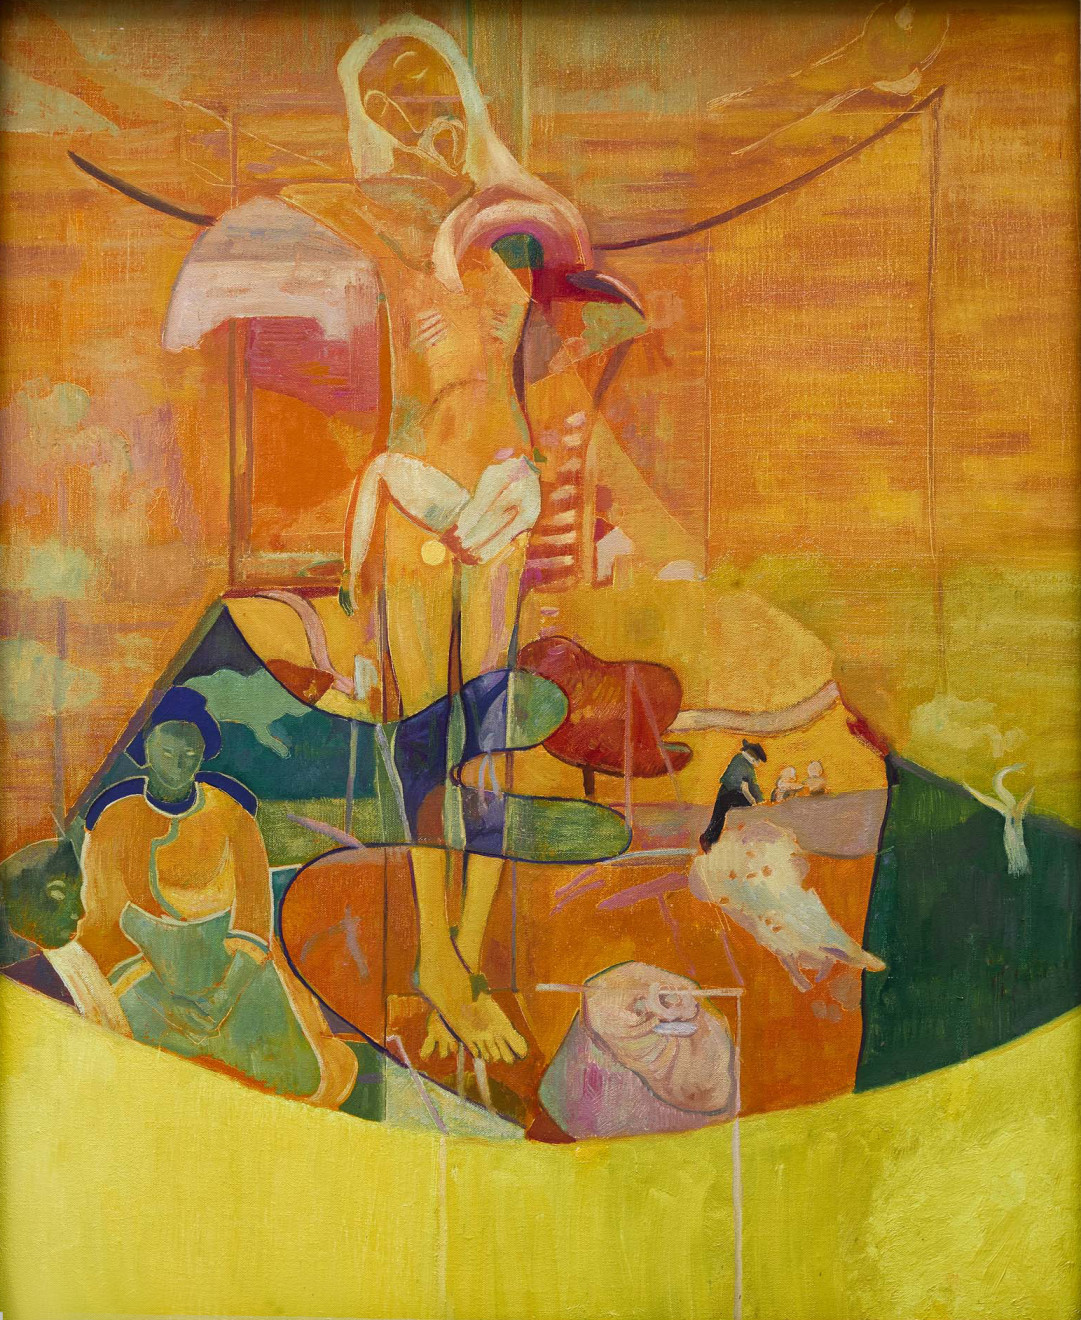 Wolfe von Lenkiewicz, The Yellow Christ, 2016